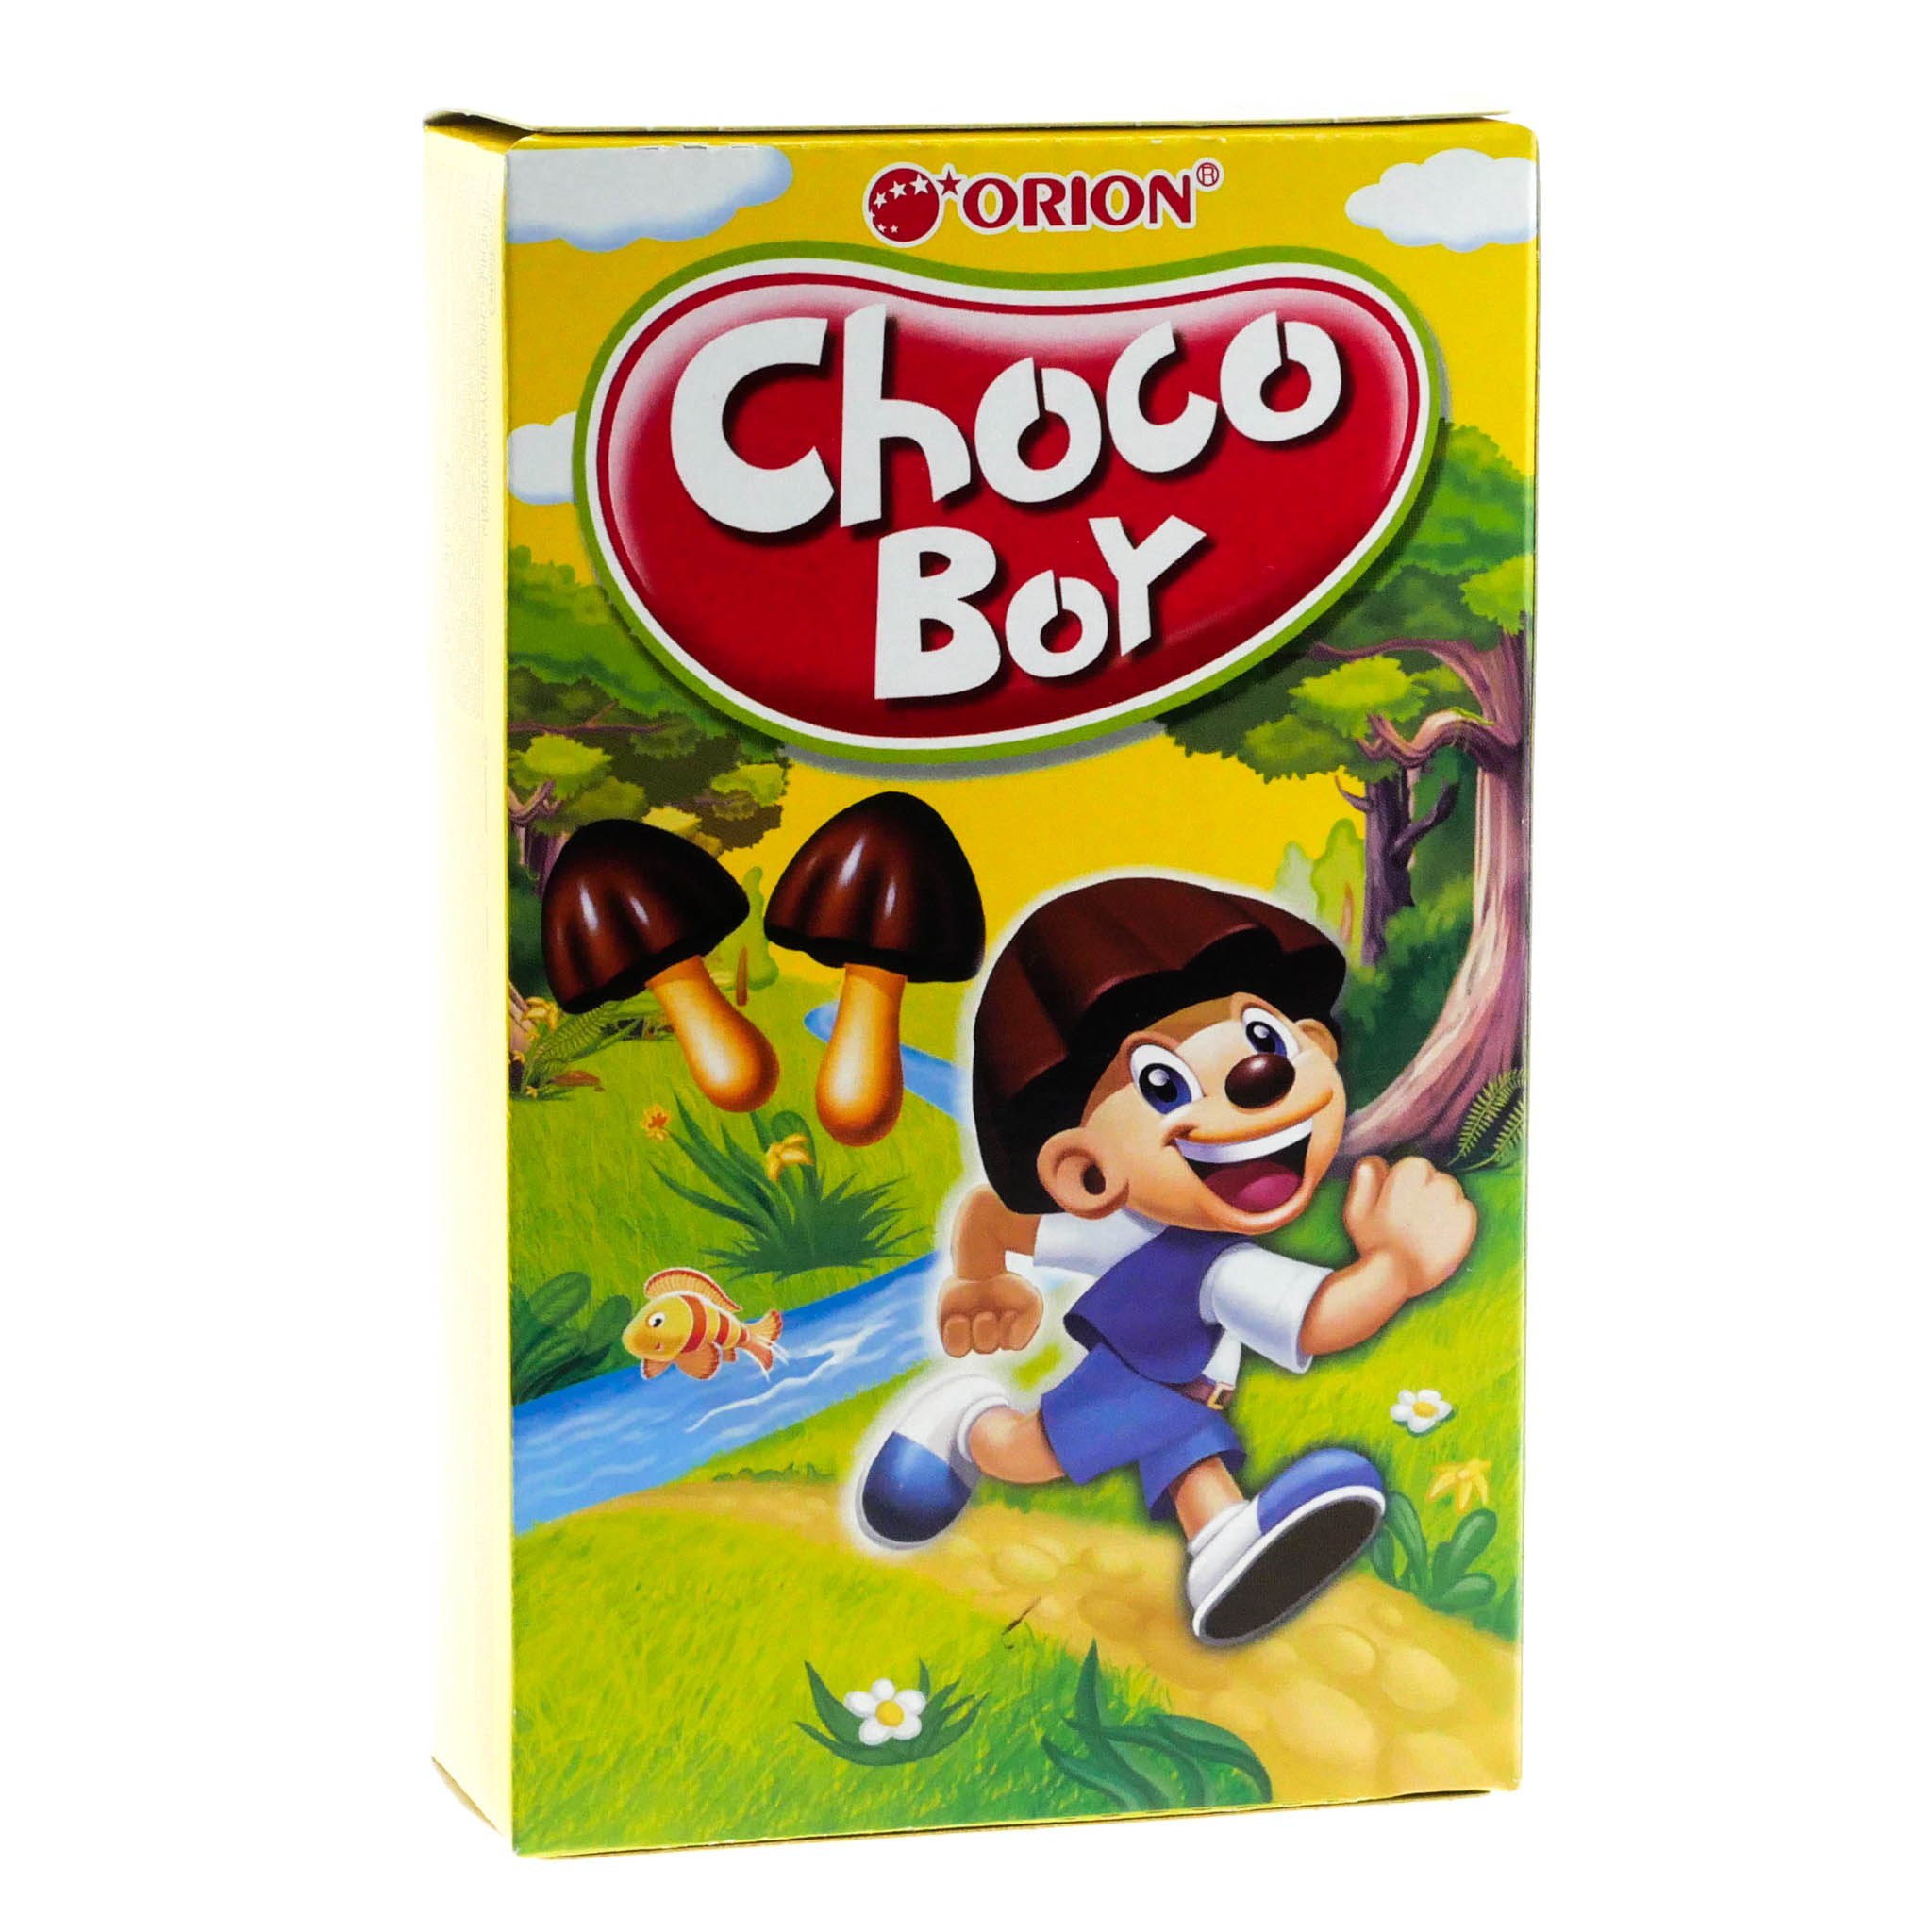 Jelly boy orion. Грибочки шоколадные Choco boy. Картинка печенье грибочки Чоко бой. Чоко бой грибочки маленькая упаковка. Чоко бой грибочки штрихкод.